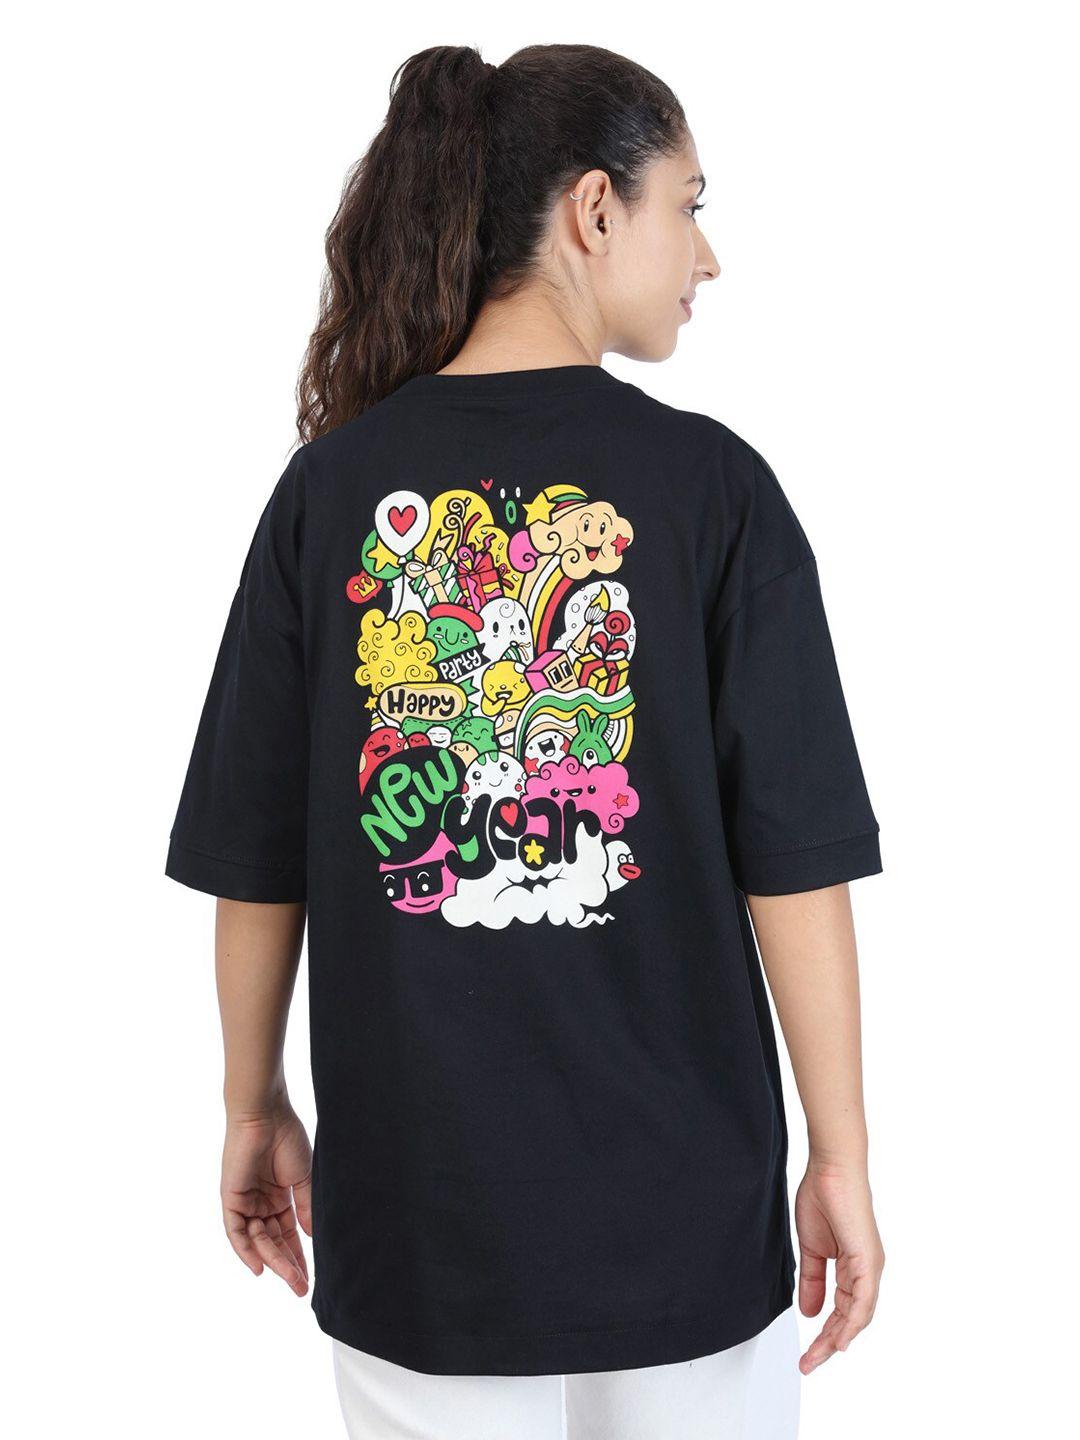 zu women floral printed applique t-shirt